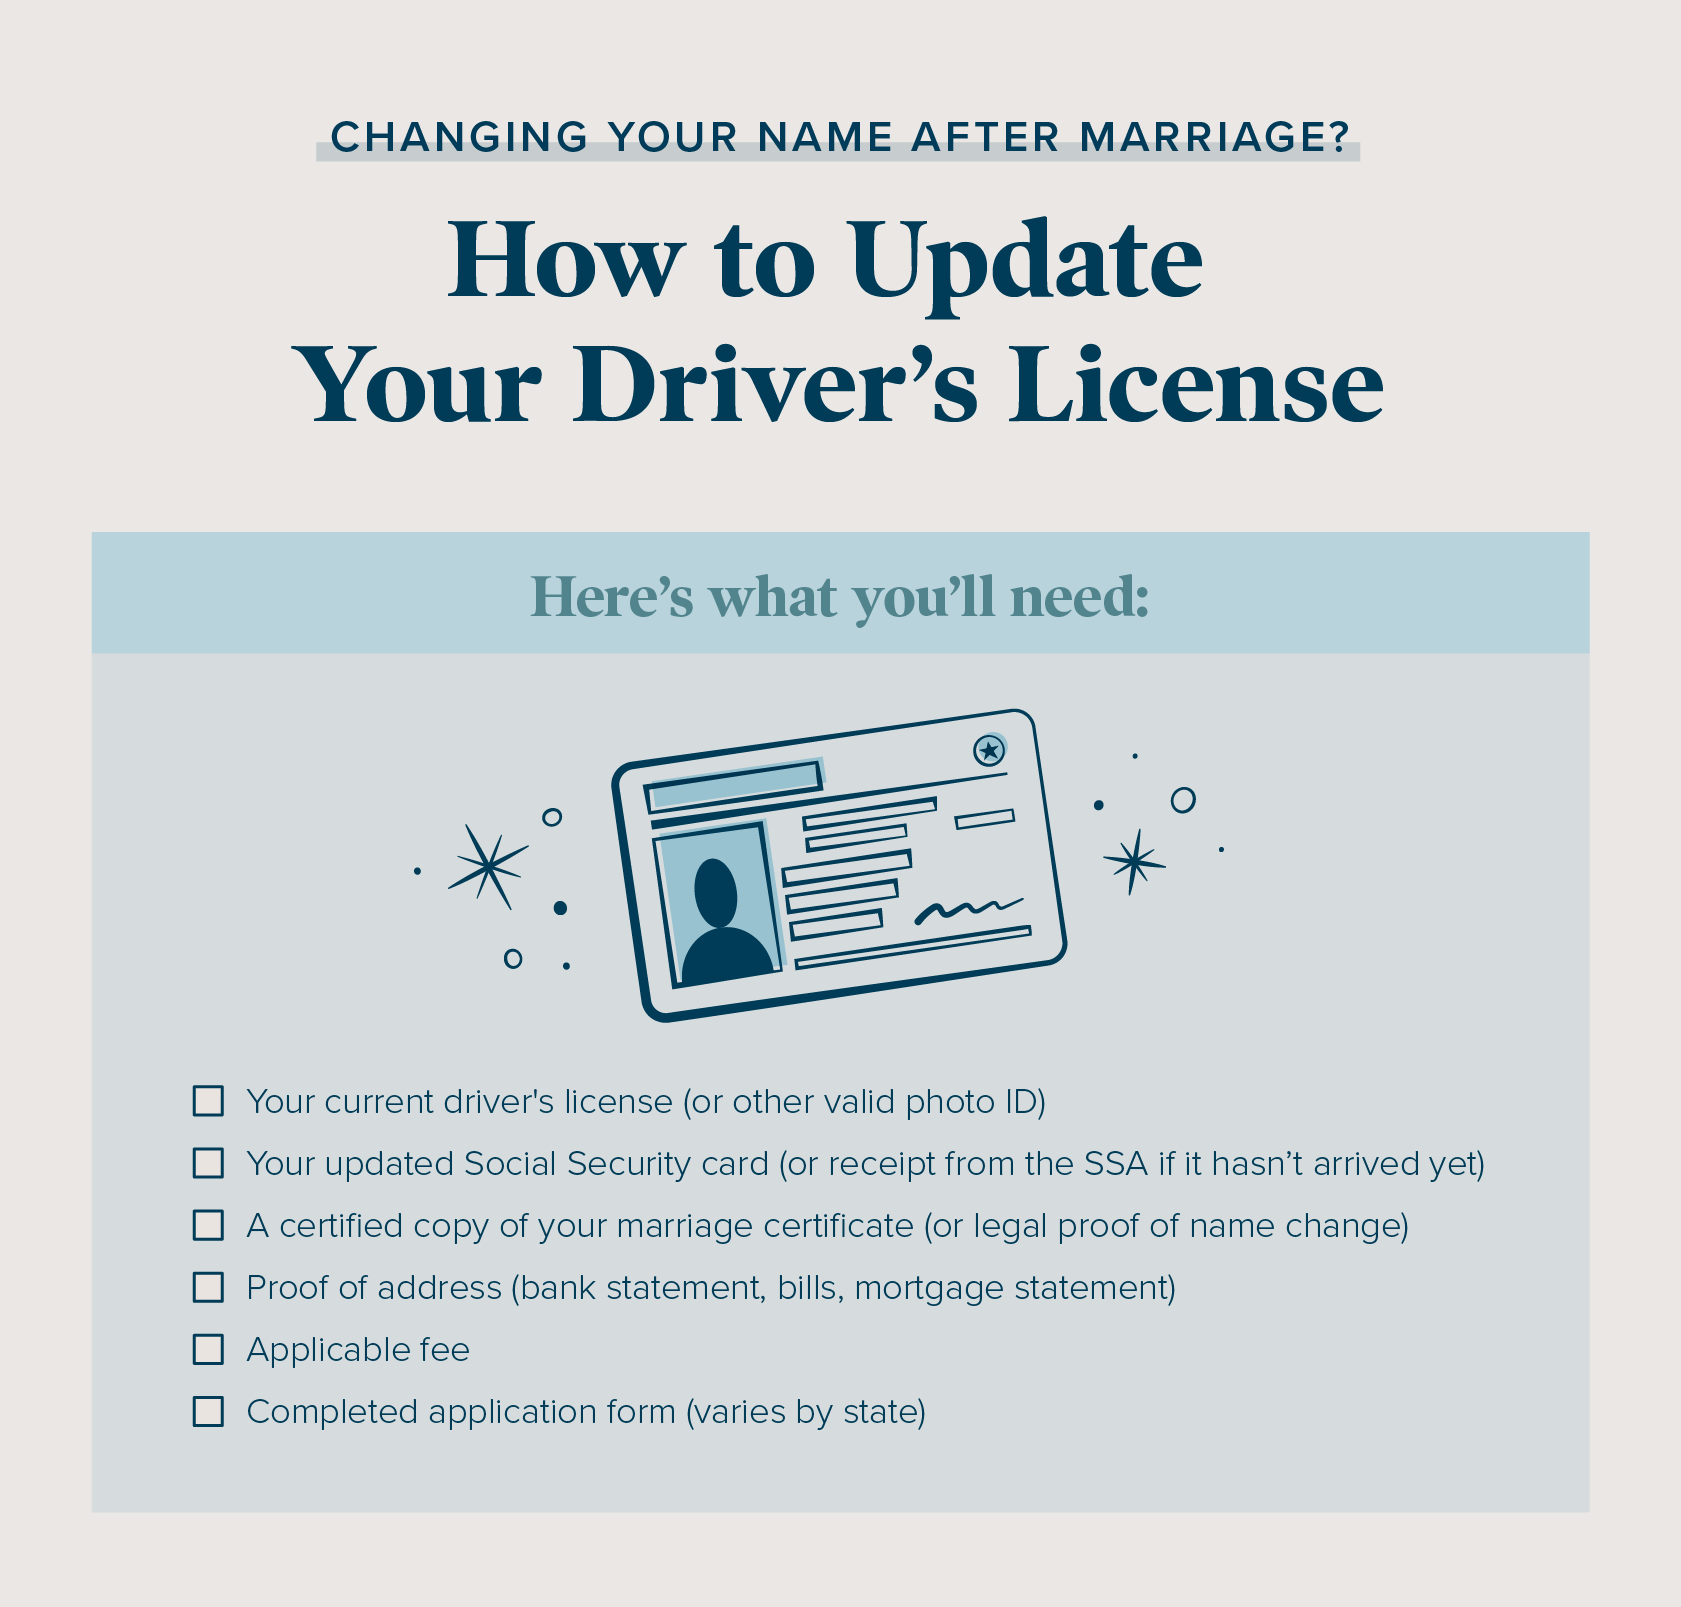 Marriage Name Change Tips - Easy Name Change Canada